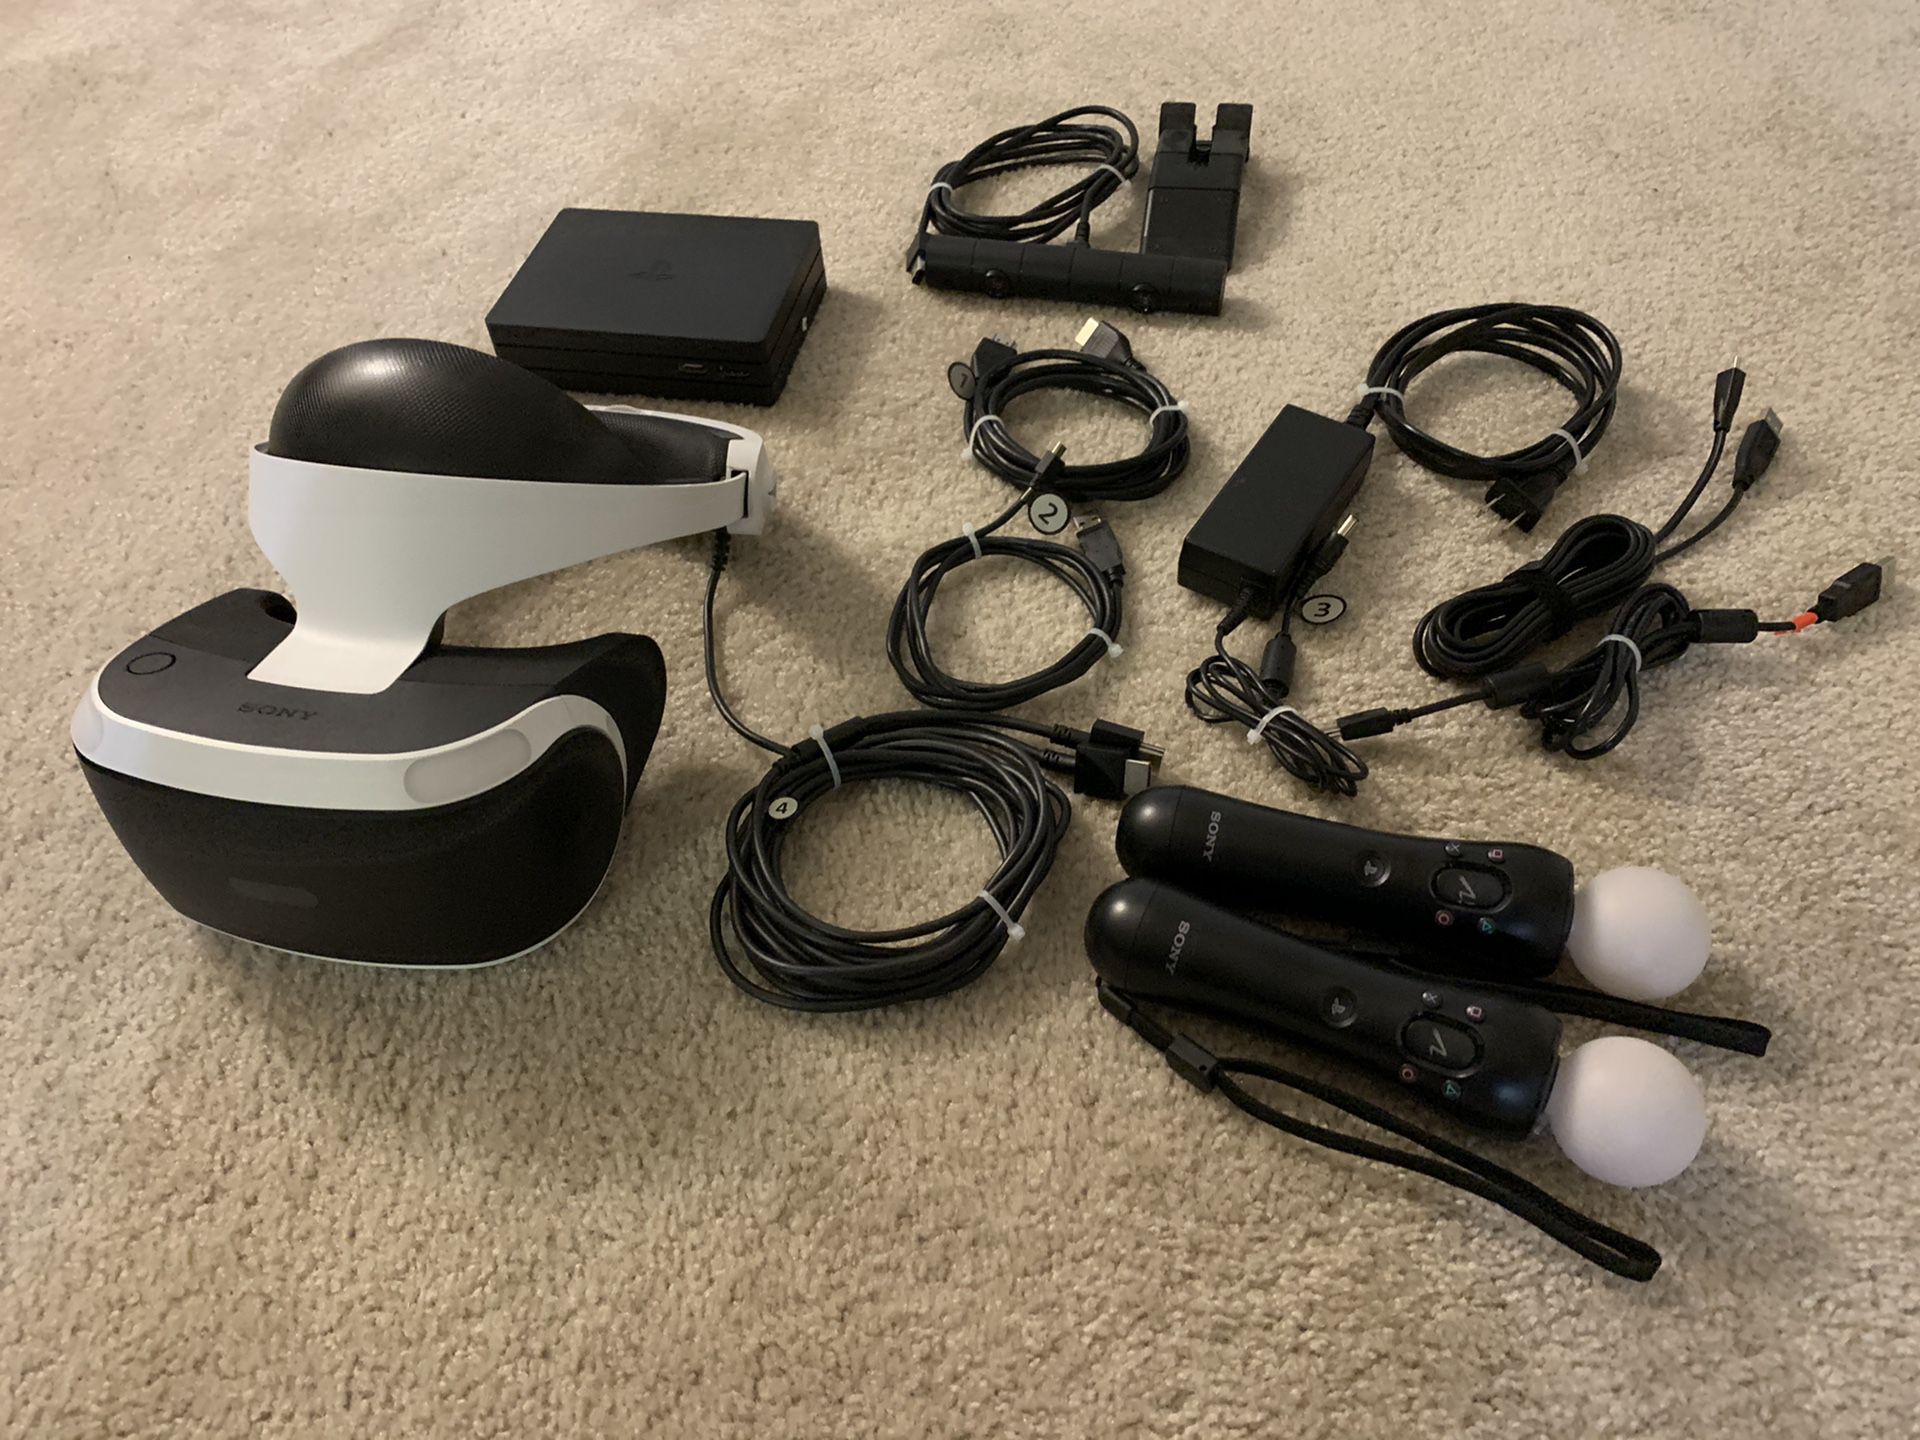 PlayStation VR Set